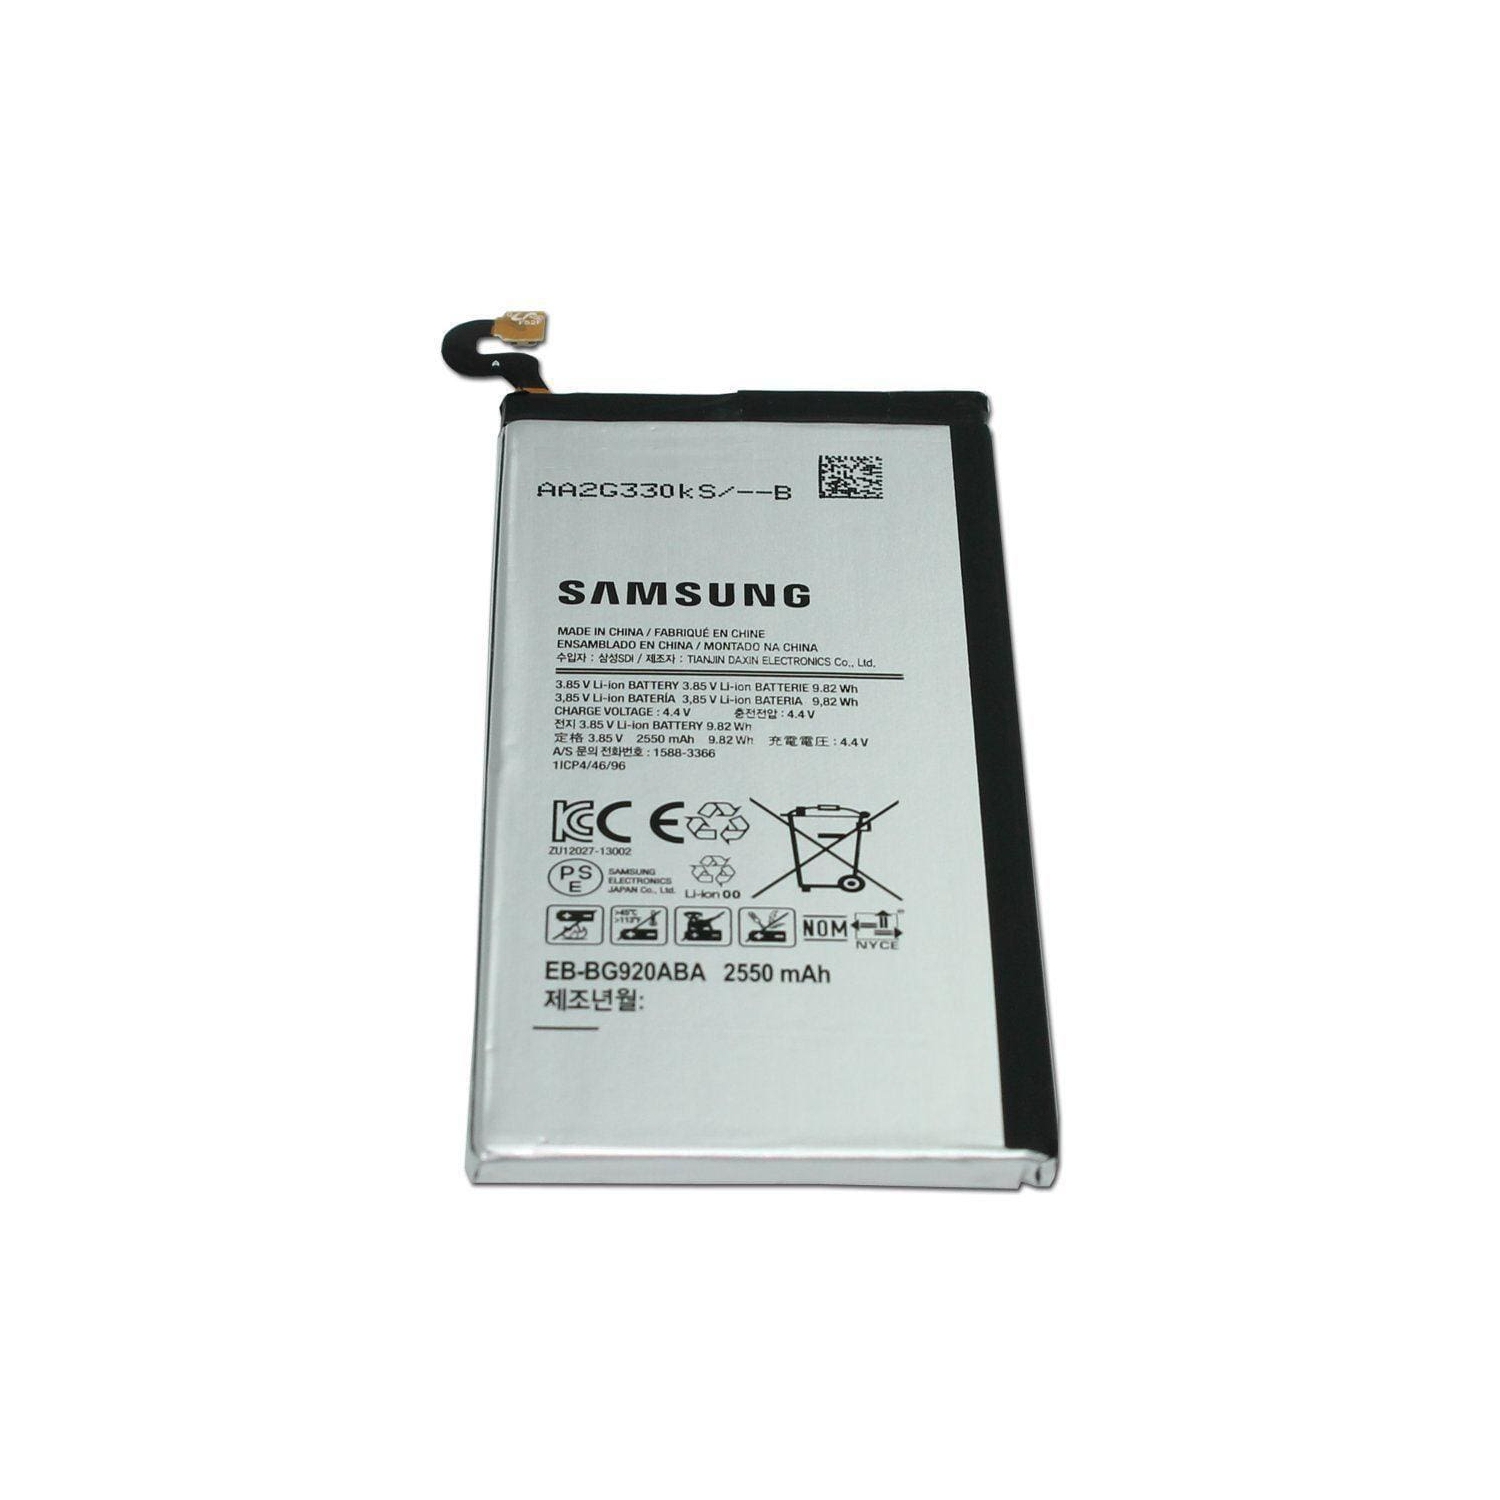 Original Samsung Galaxy S6 battery EB-BG920ABA 2550 mAh for SM-G920W8 SM-G920